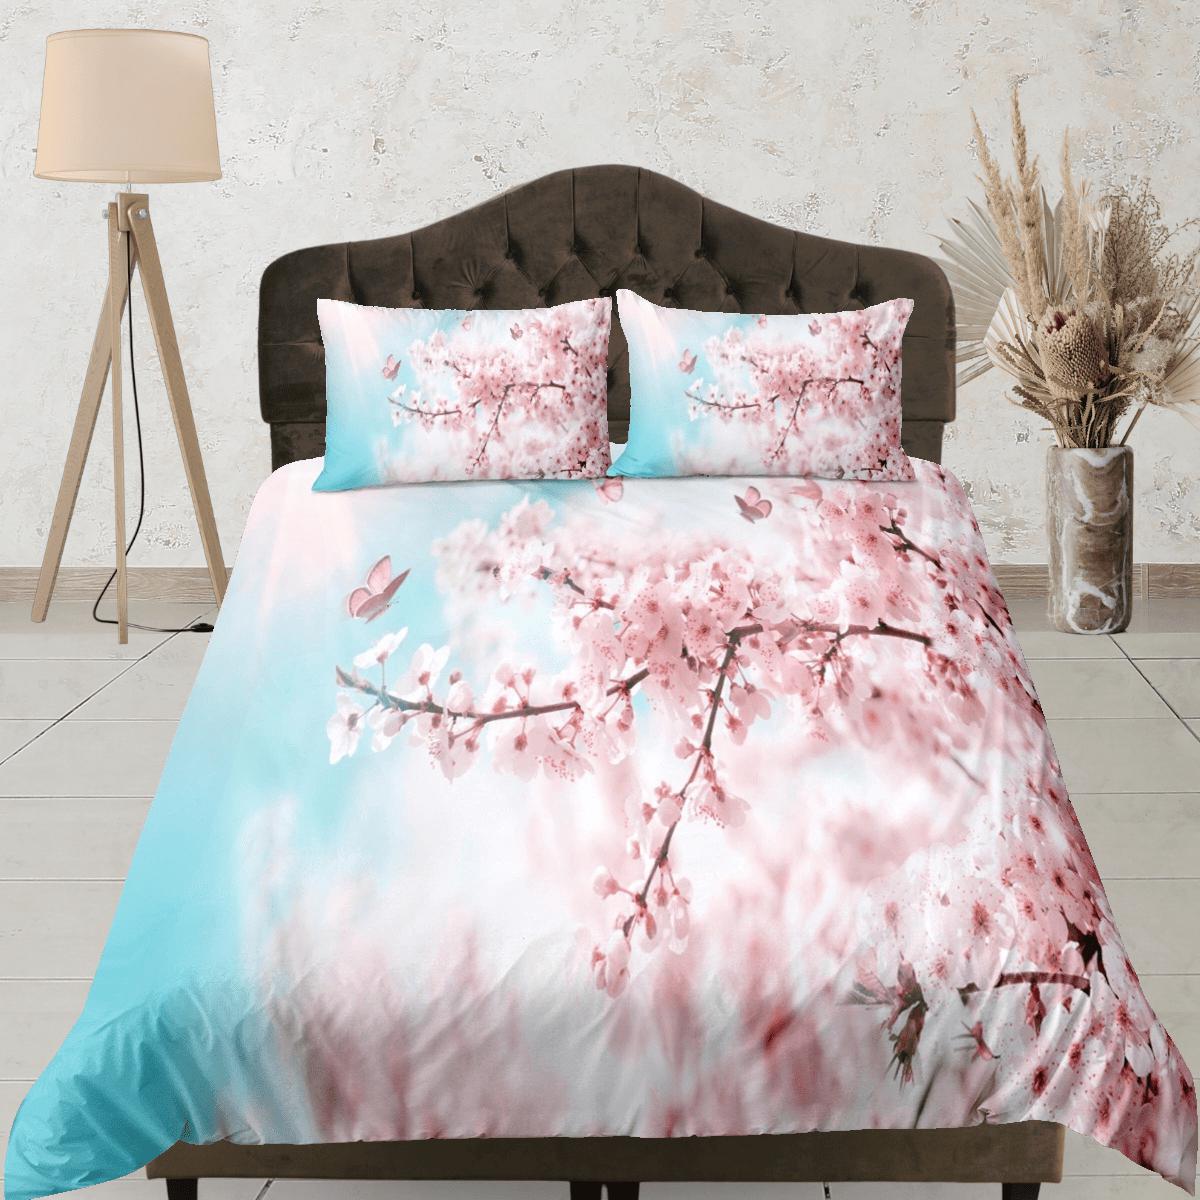 daintyduvet Cherry blossom tree bedding floral prints duvet cover queen, king, boho bedding designer bedspread maximalist full size bedding aesthetic